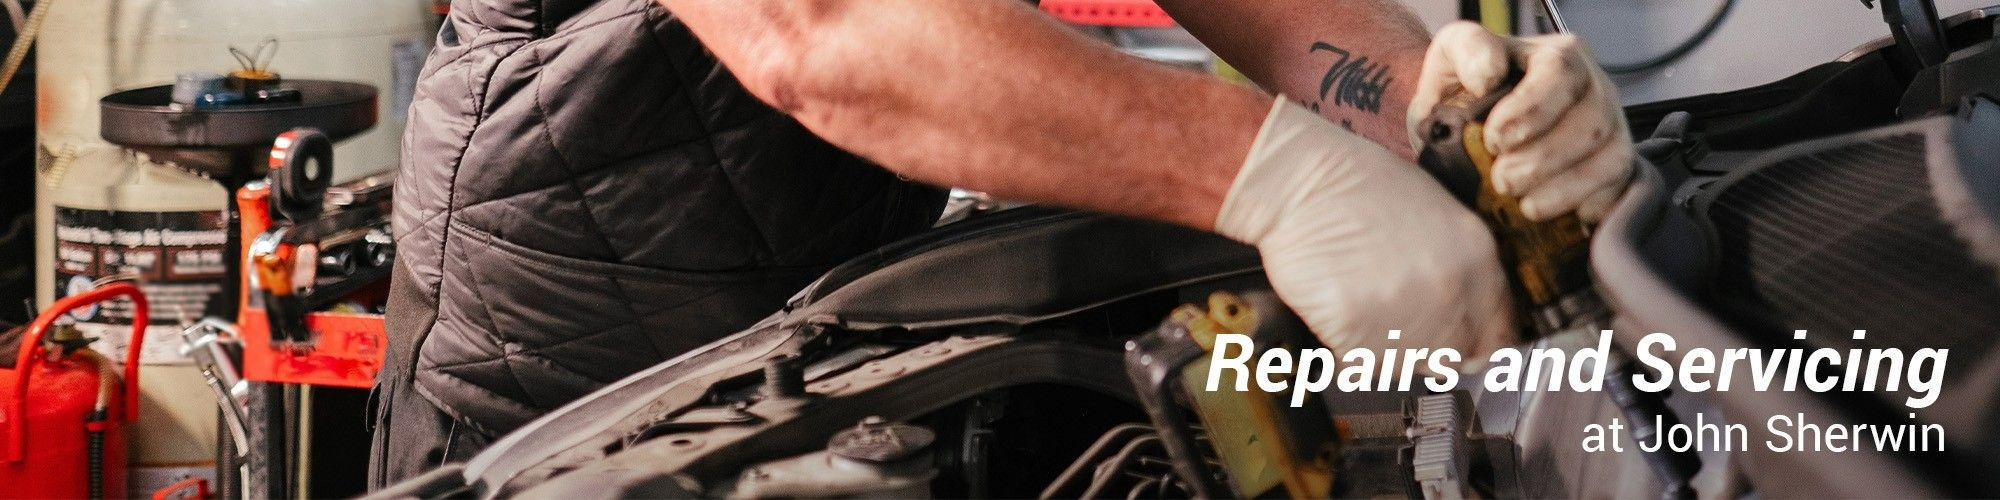 Repairs & Servicing at John Sherwin VW & Audi Specialist Ltd